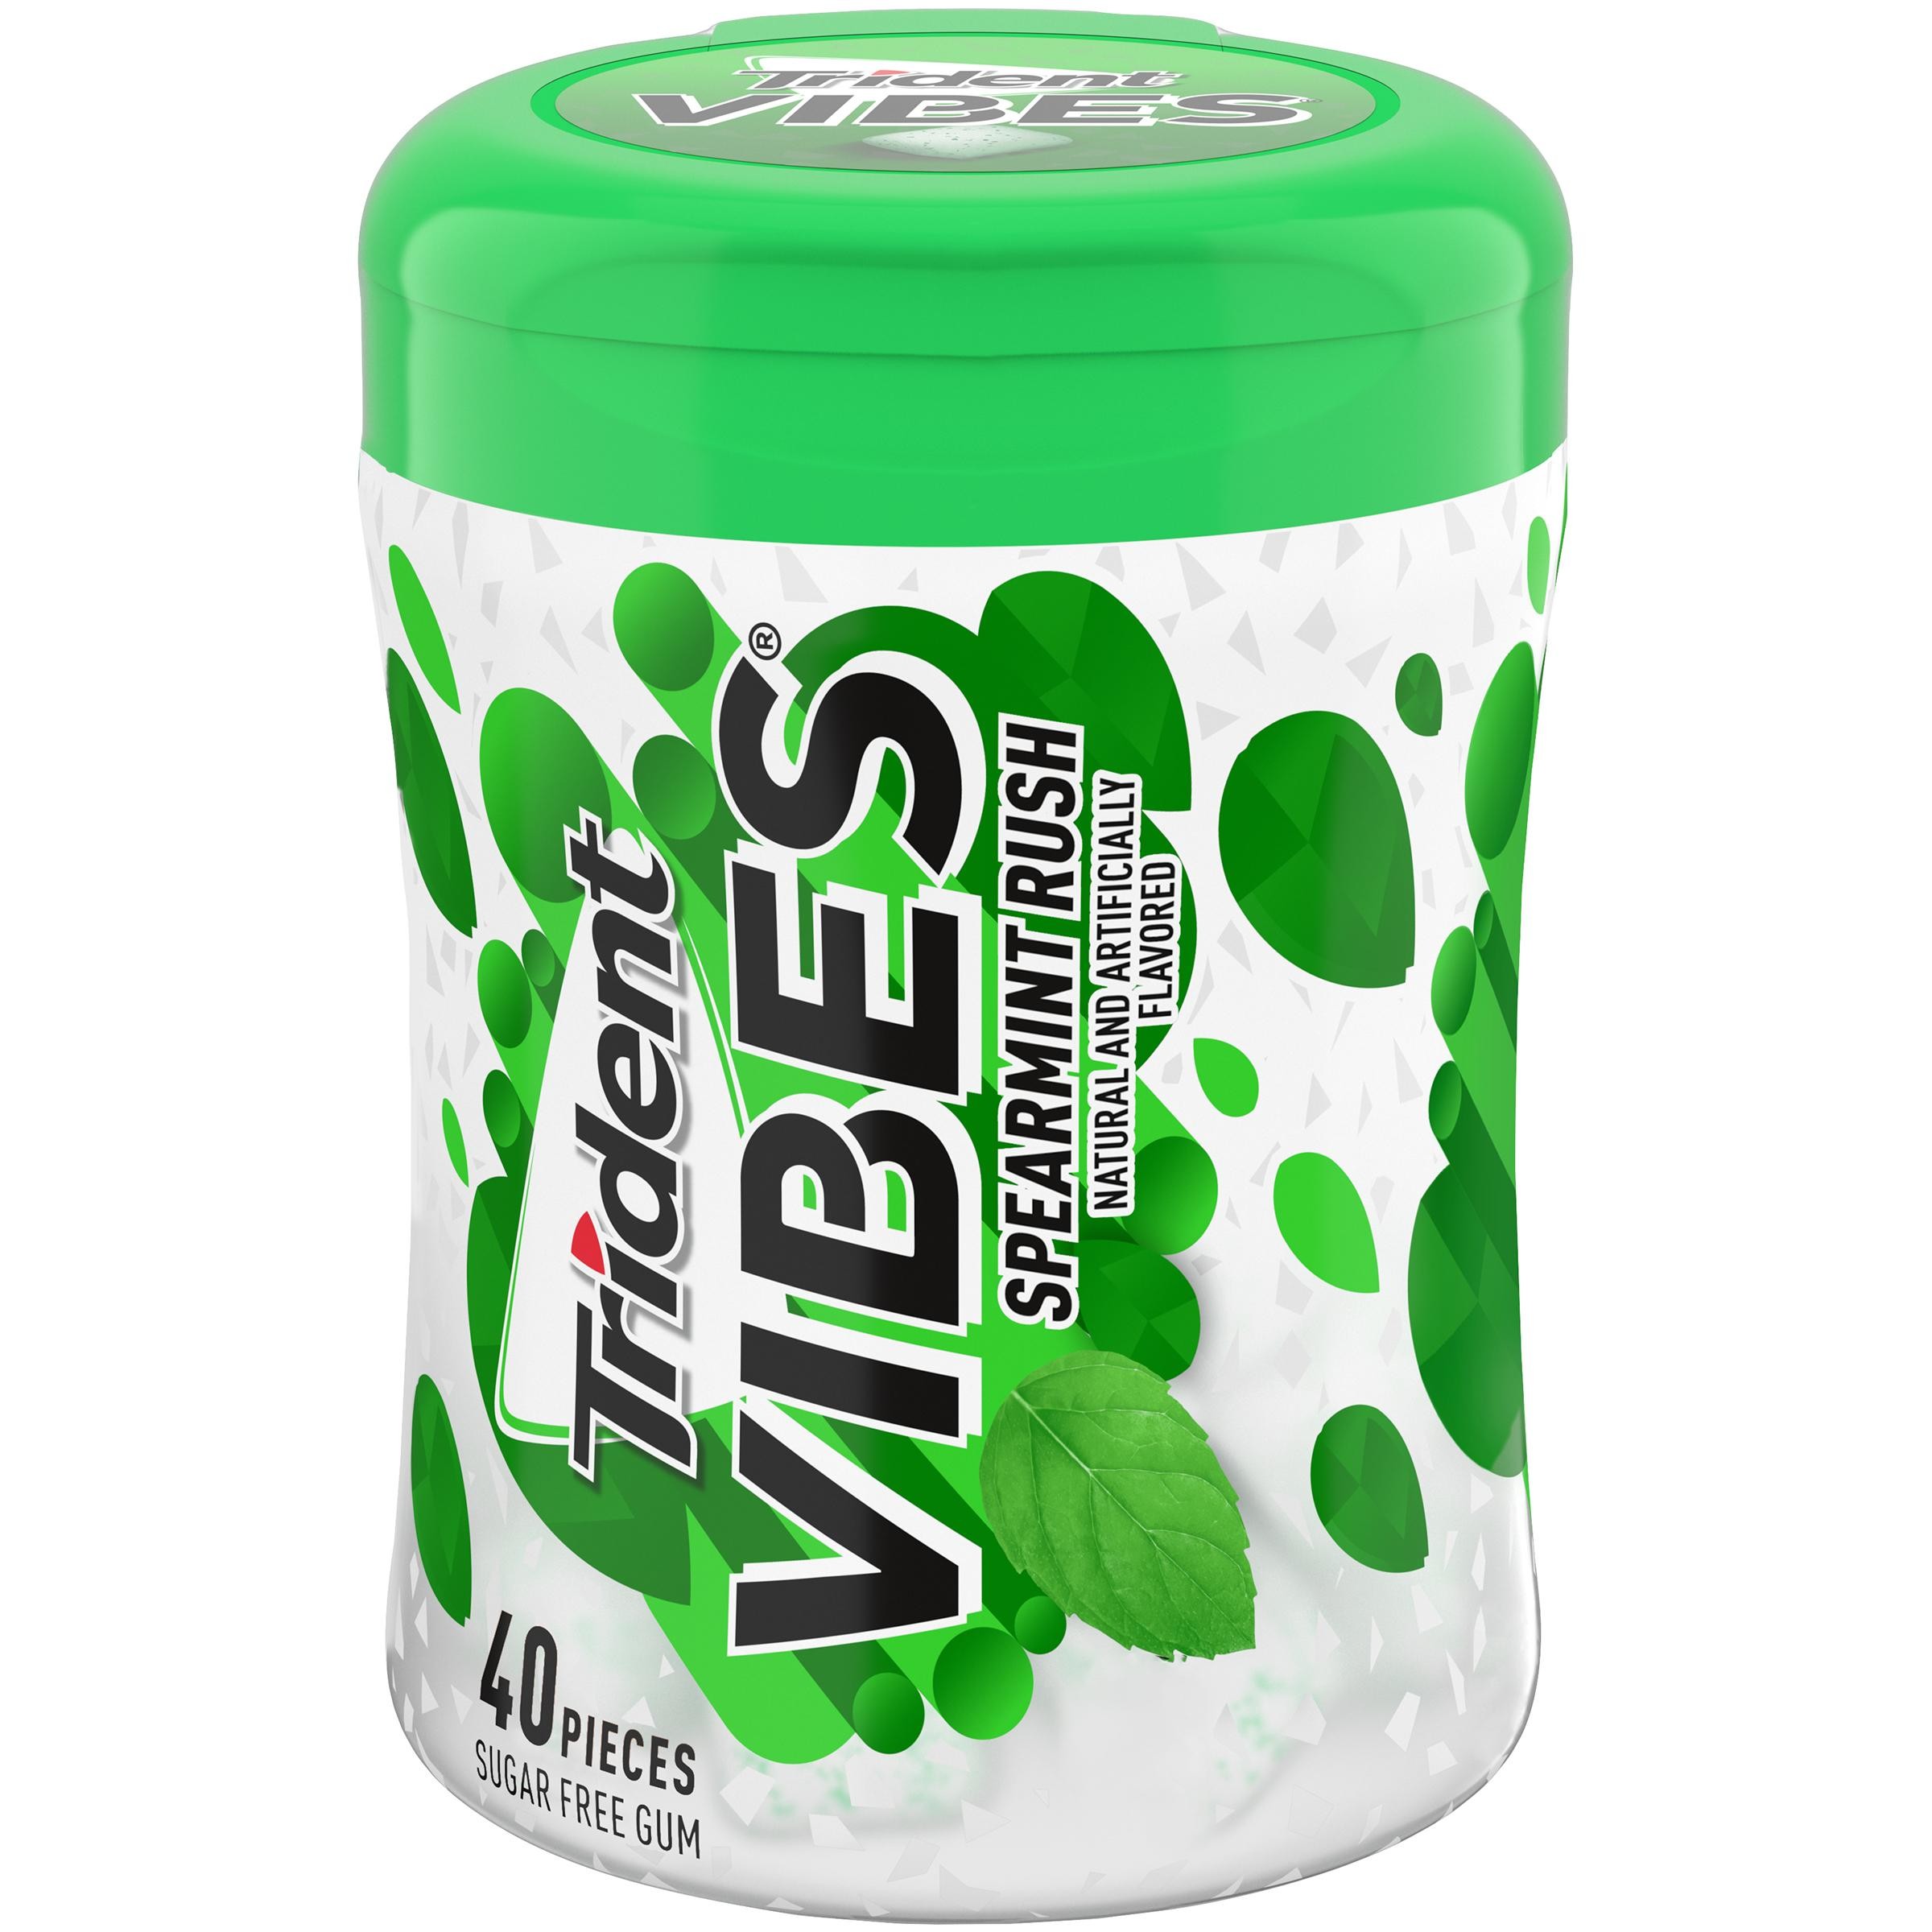 Trident Vibes Sugar Free Gum  Spearmint Rush Flavor  1 Go-Cup (40 Pieces Total)